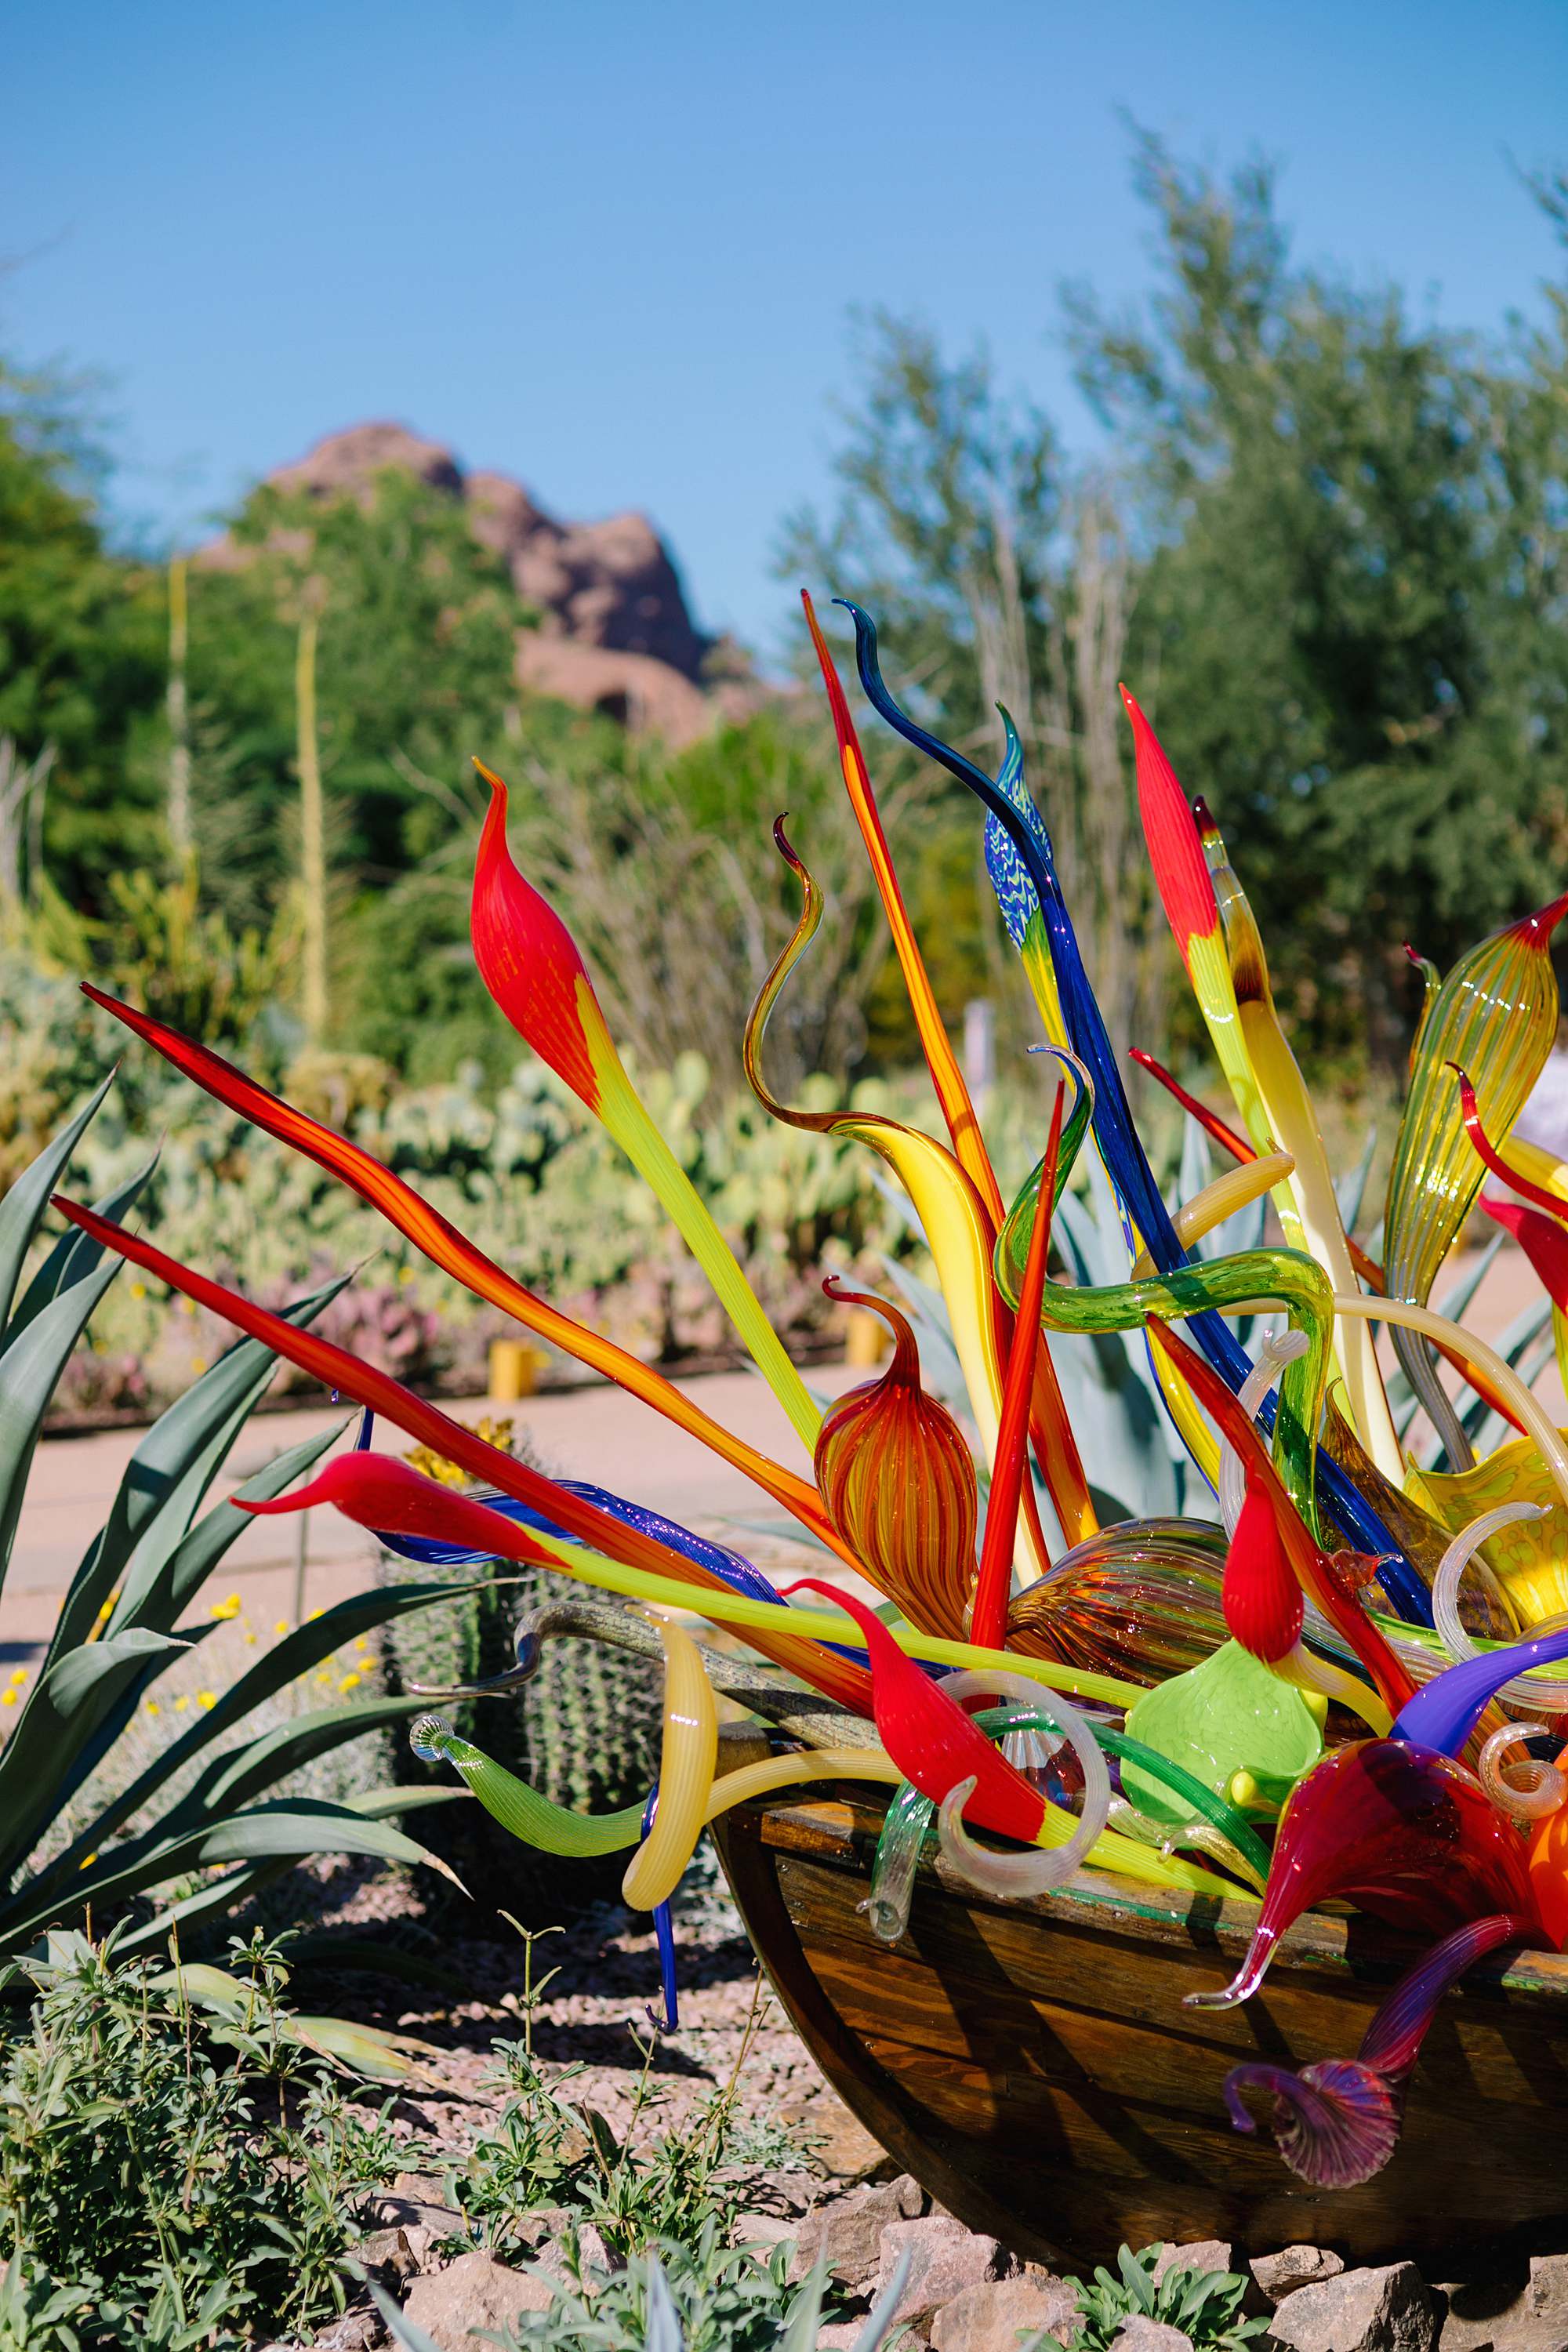 Chihuly art glass blown art exhibition in phoenix Arizona